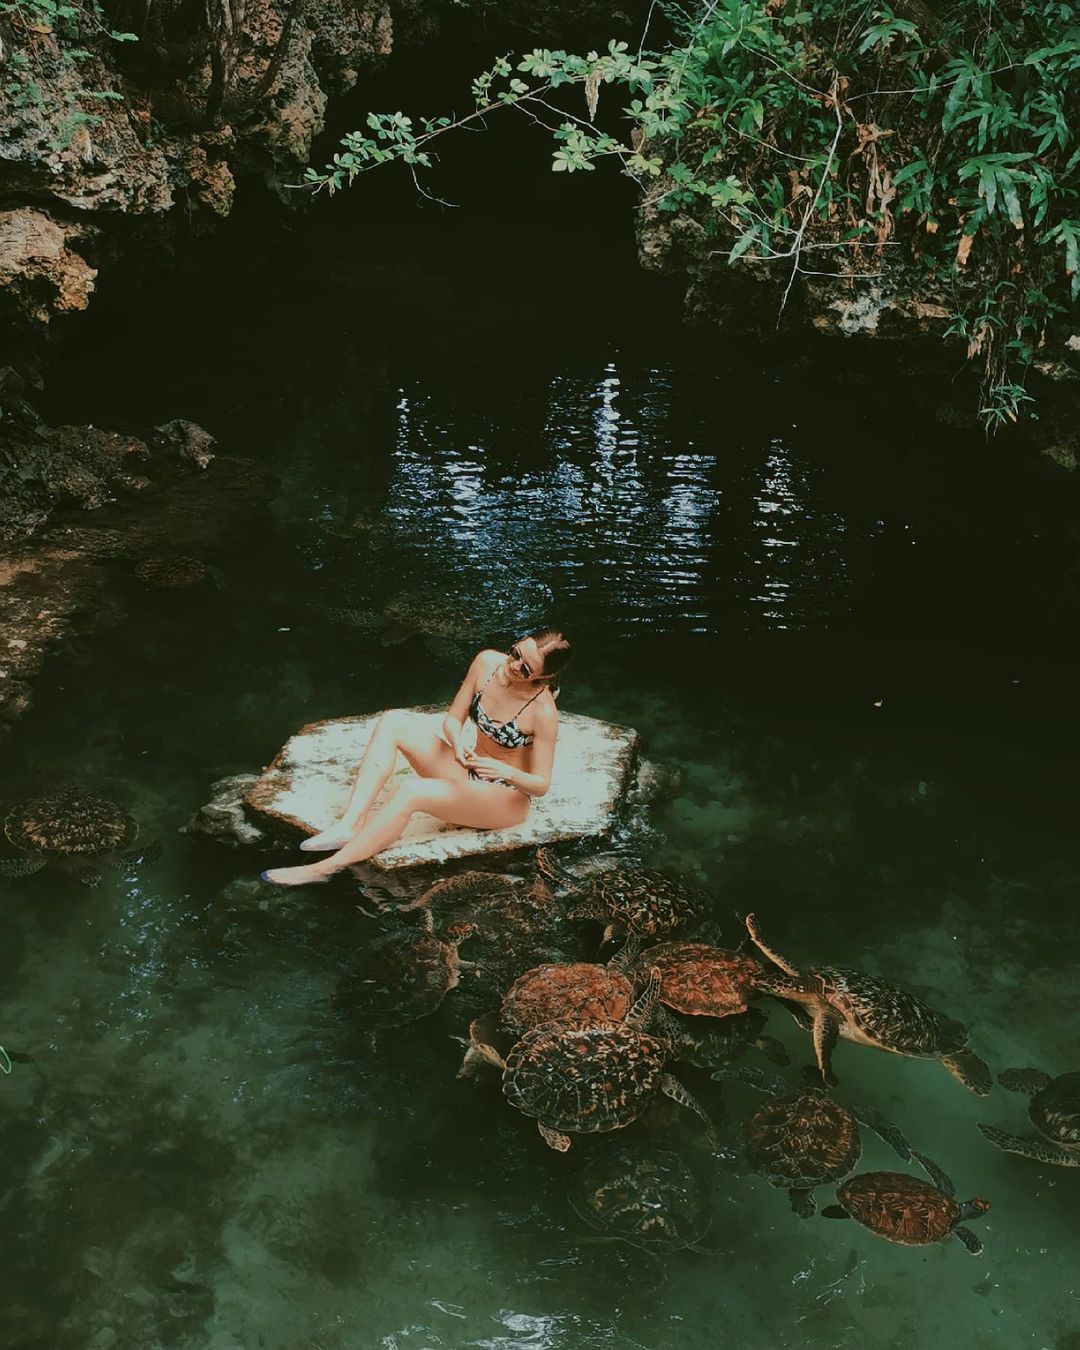 Swim with turtles sanctuary Zanzibar